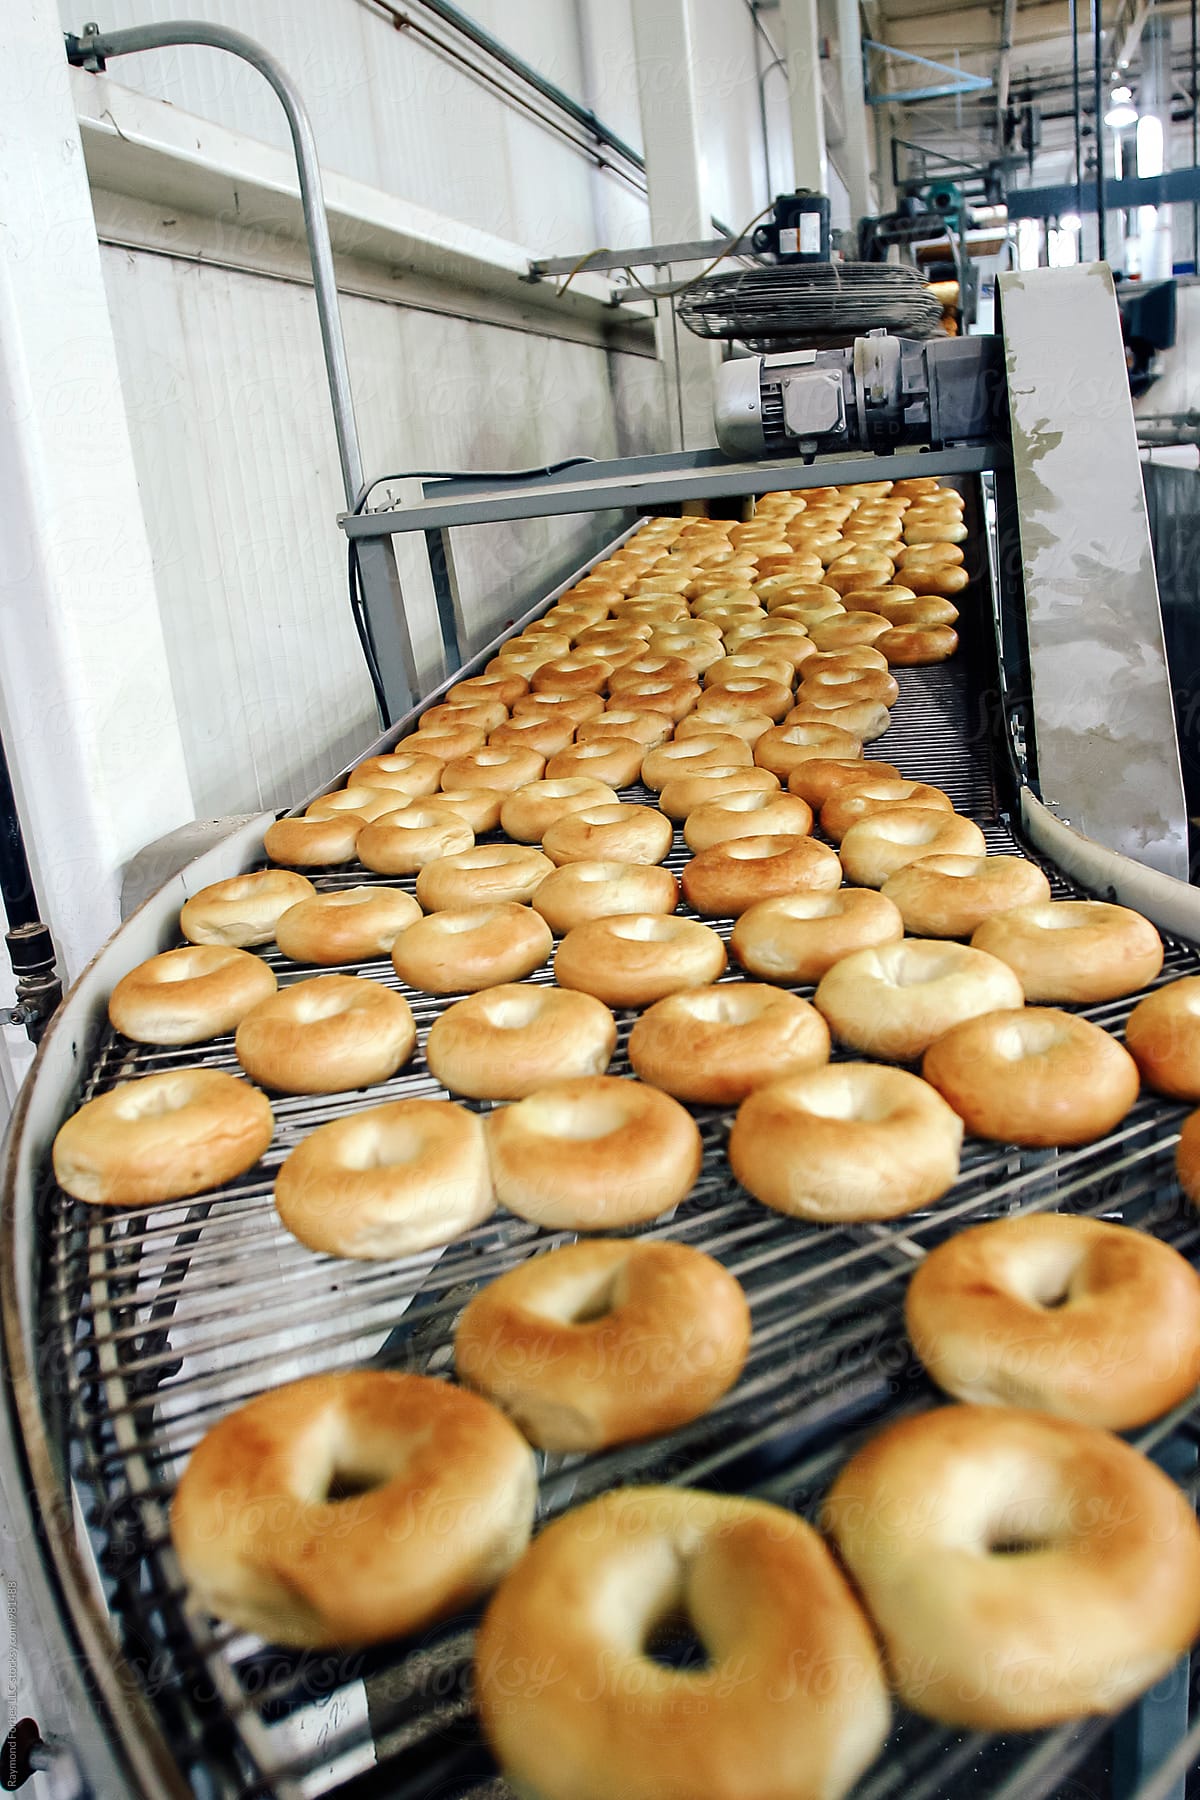 Conveyor belt with bagel food production